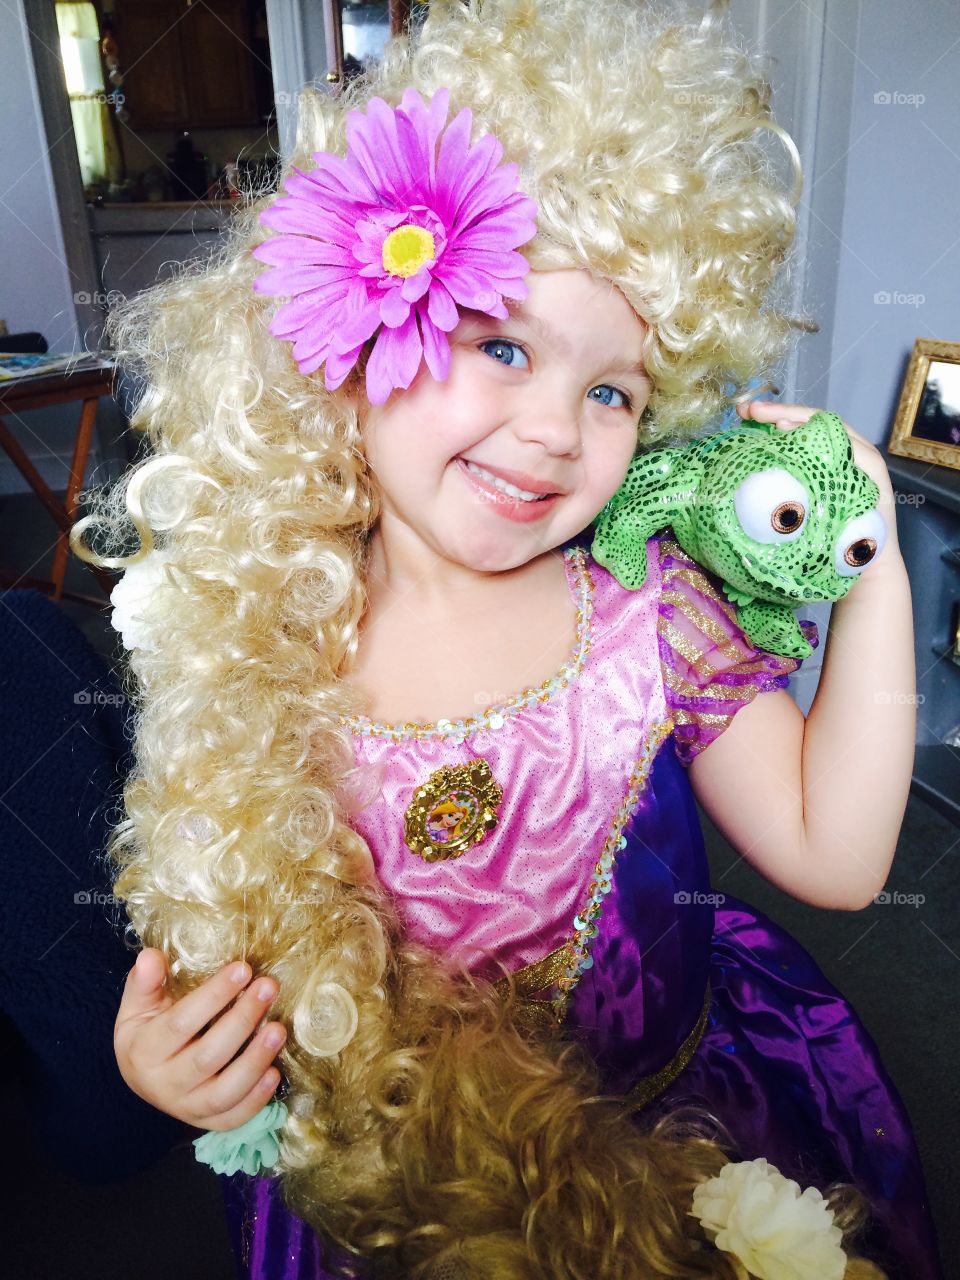 My sweet girl dressed like Rapunzel 